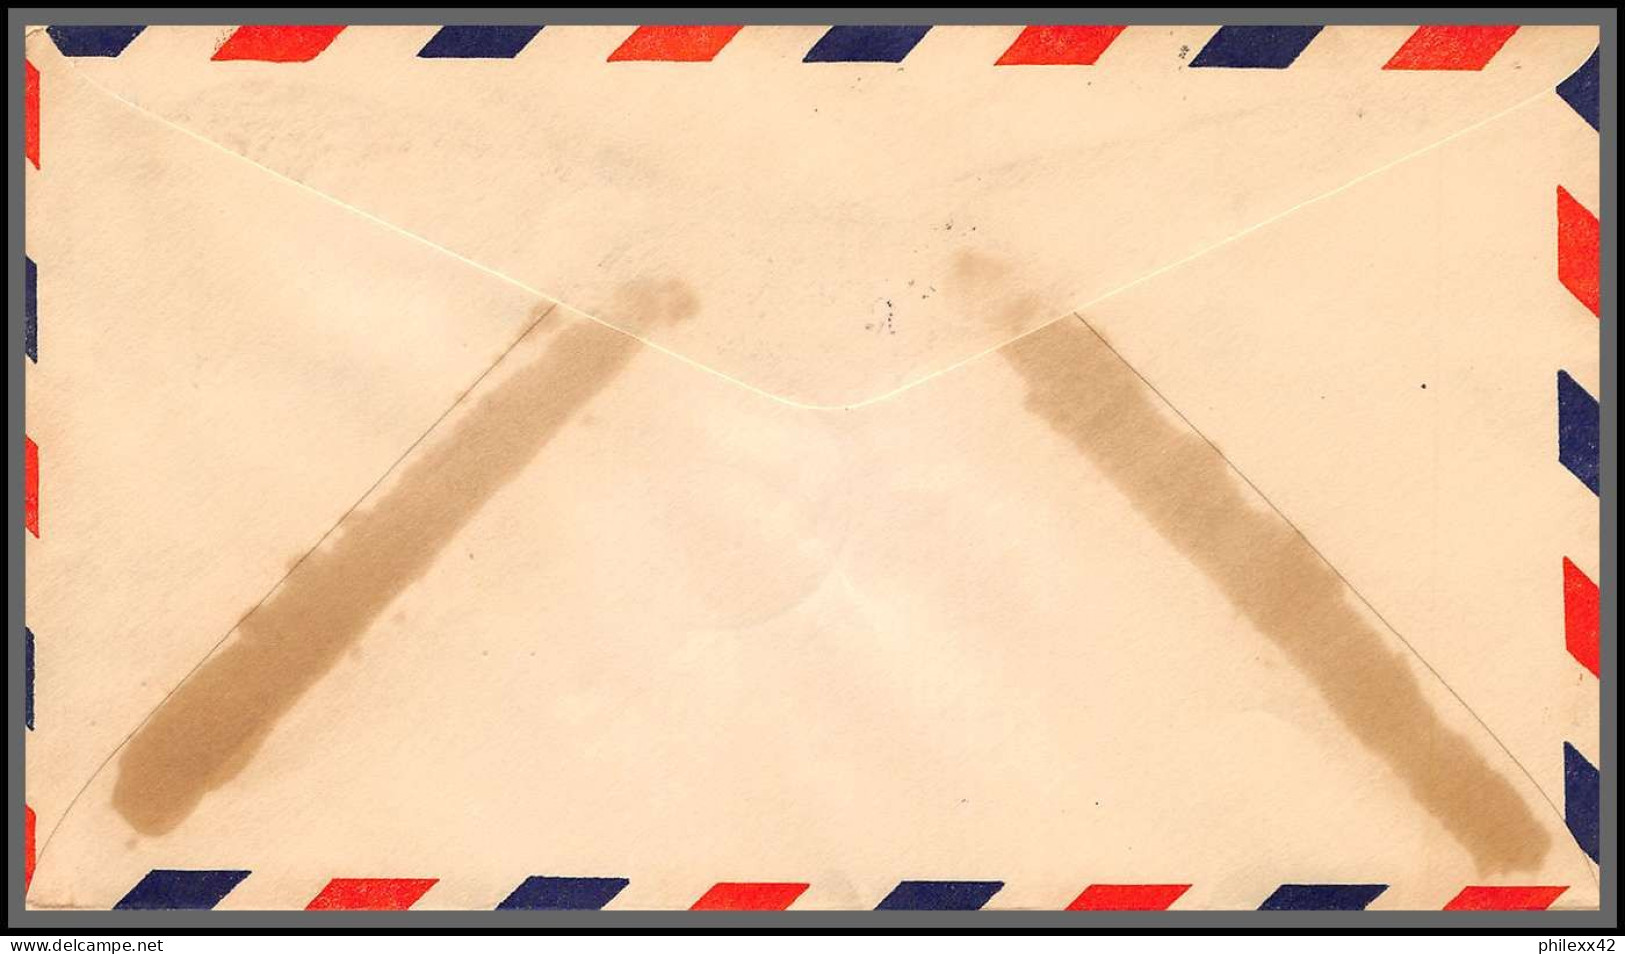 12110 Colosboro 12/10/1937 Premier Vol First All North Carolina Air Mail Flights Lettre Airmail Cover Usa Aviation - 1c. 1918-1940 Briefe U. Dokumente